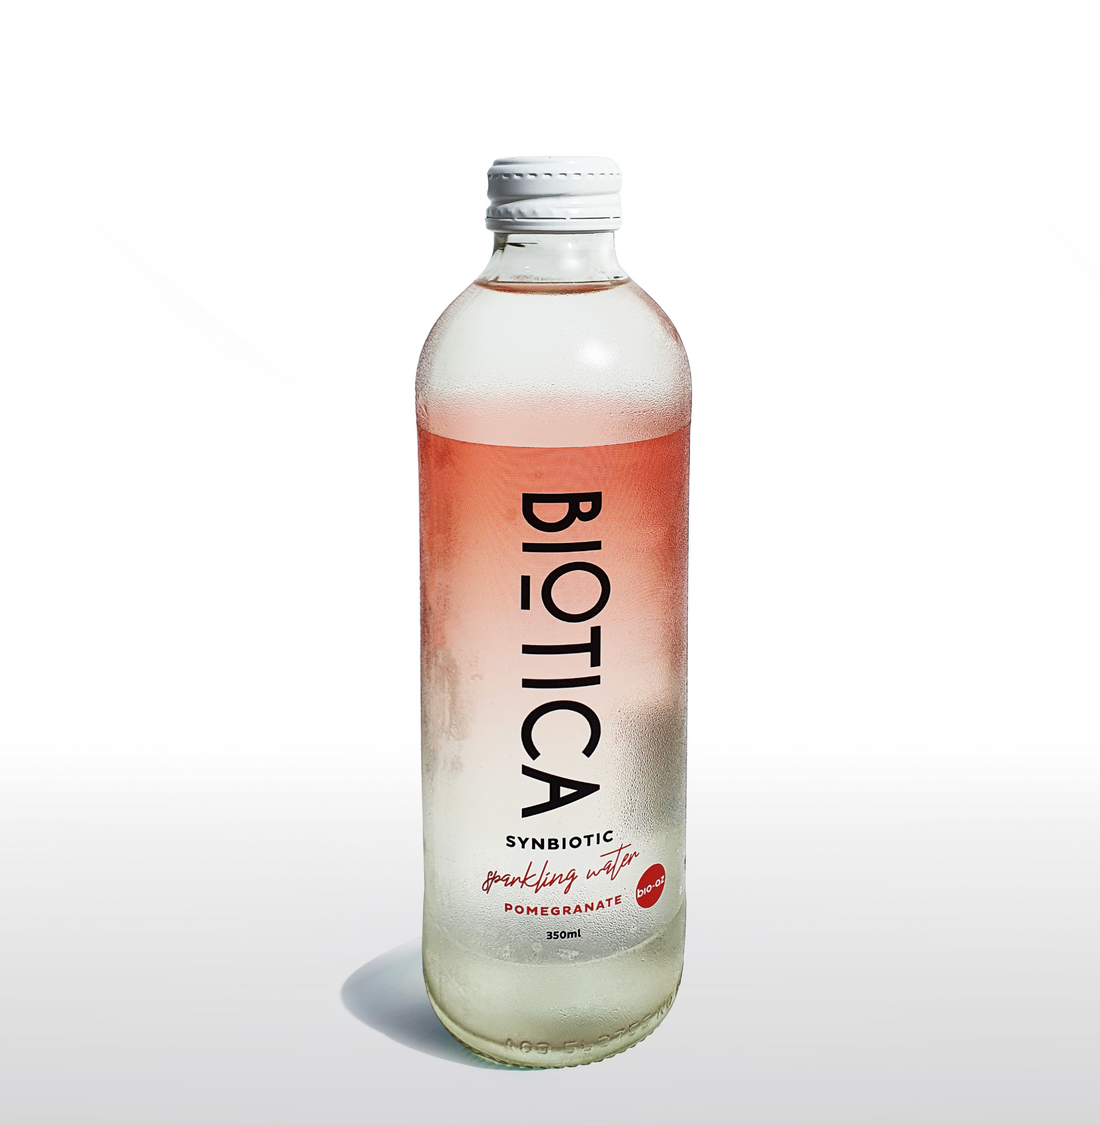 Probiotic Drink Pomegranate Biotica Synbiotic Sparkling Water Glass Bottle (350ml x 12)